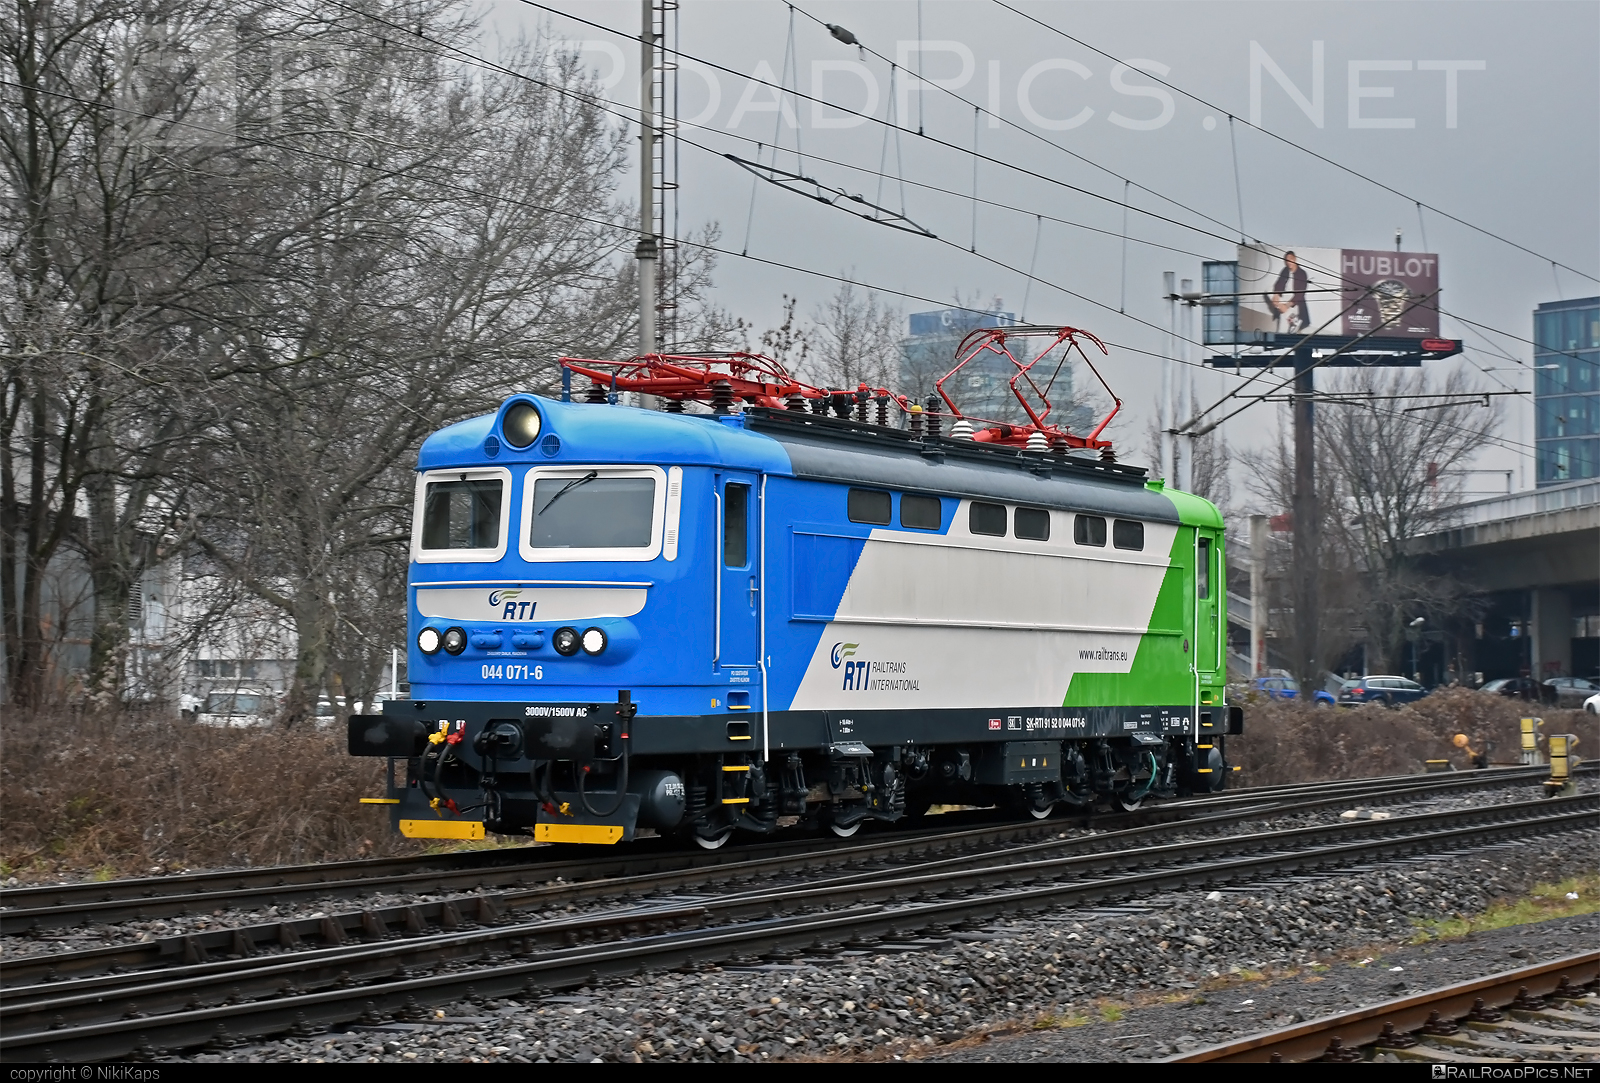 Škoda 73E - 044 071-6 operated by Railtrans International, s.r.o #RailtransInternational #locomotive242 #plechac #rti #skoda #skoda73e